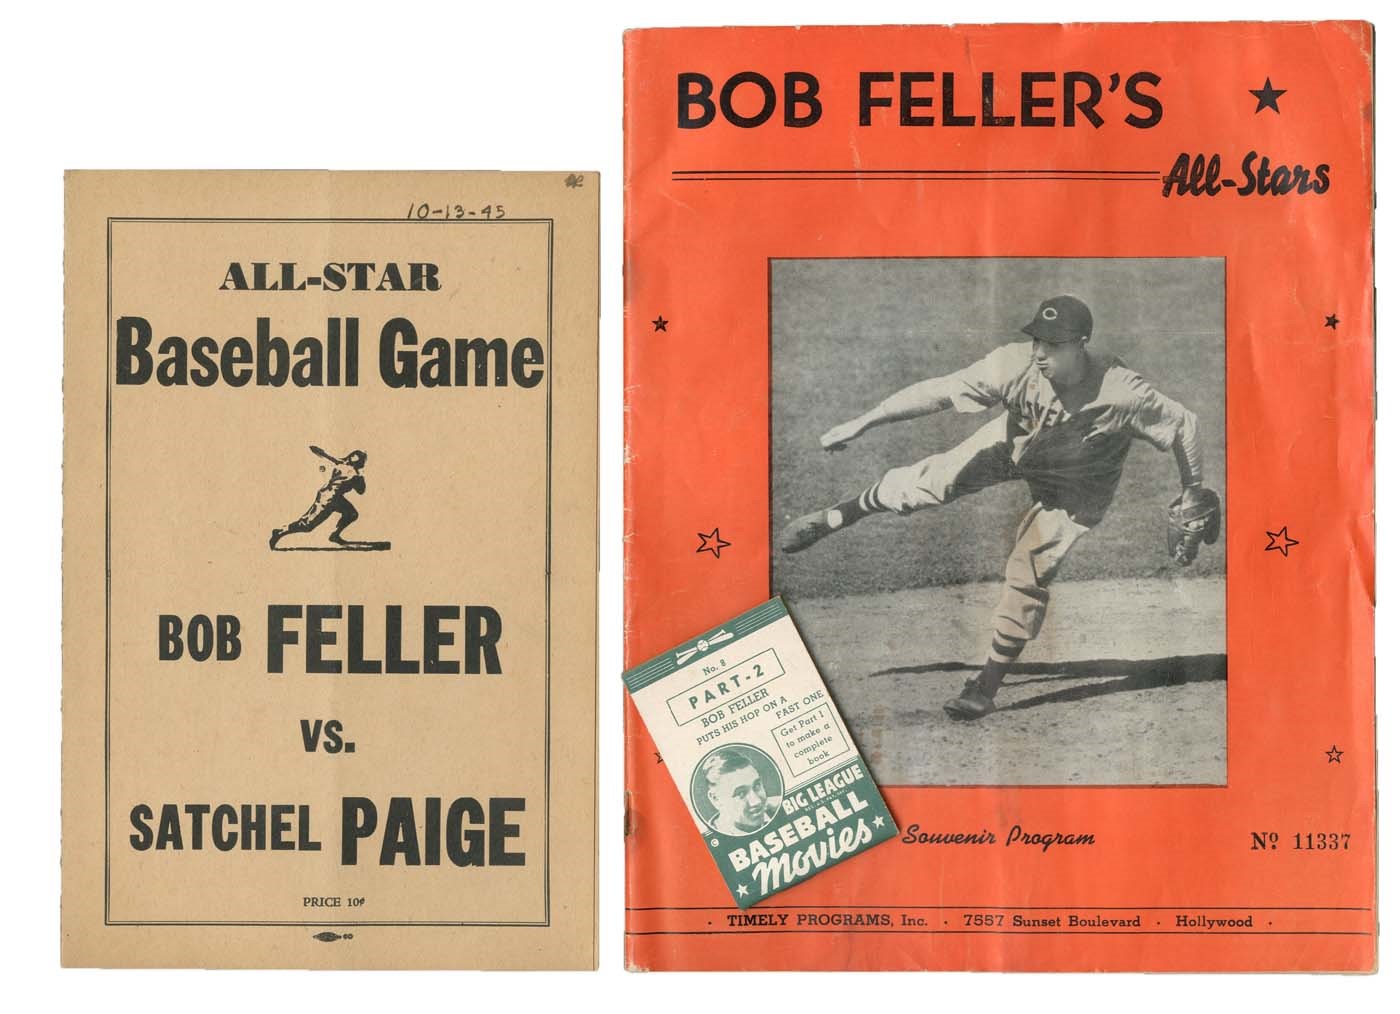 1945-46 Bob Feller All-Stars Programs and Flip Book